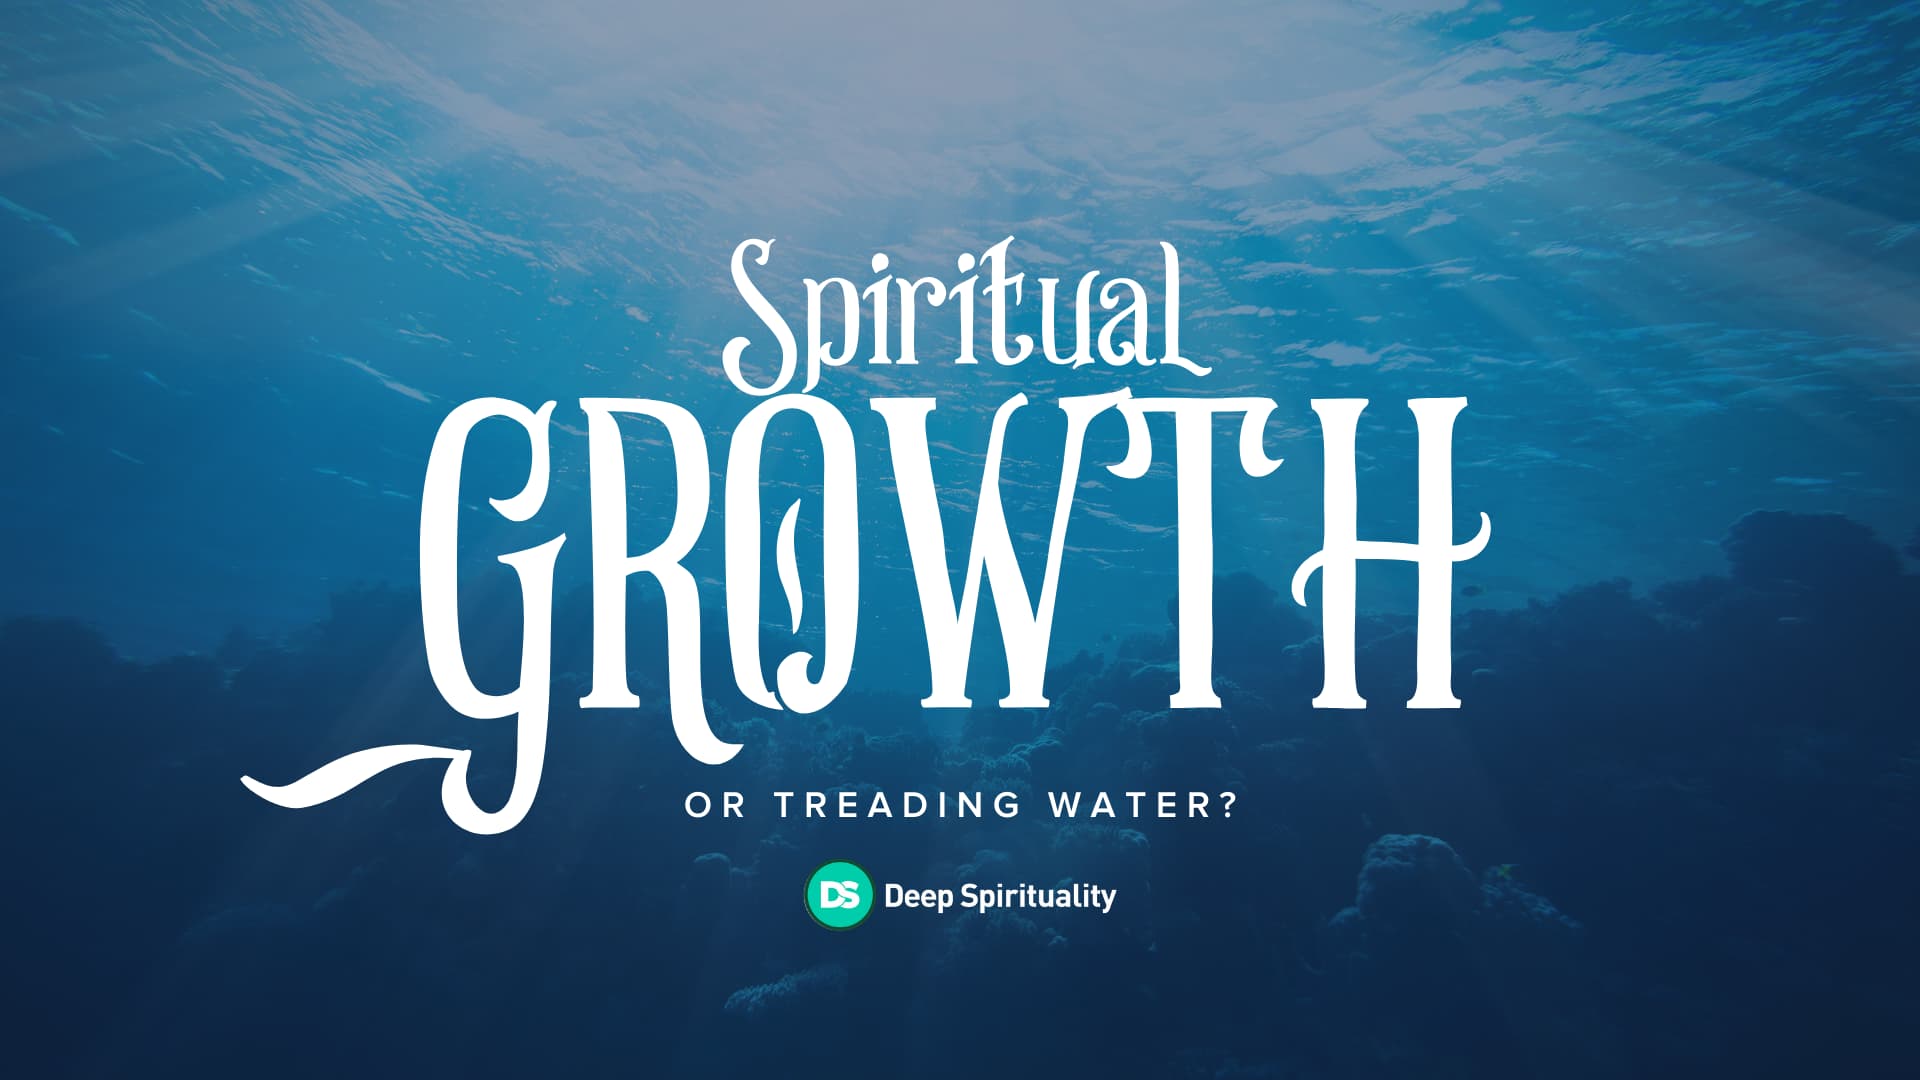 Spiritual growth or treading water